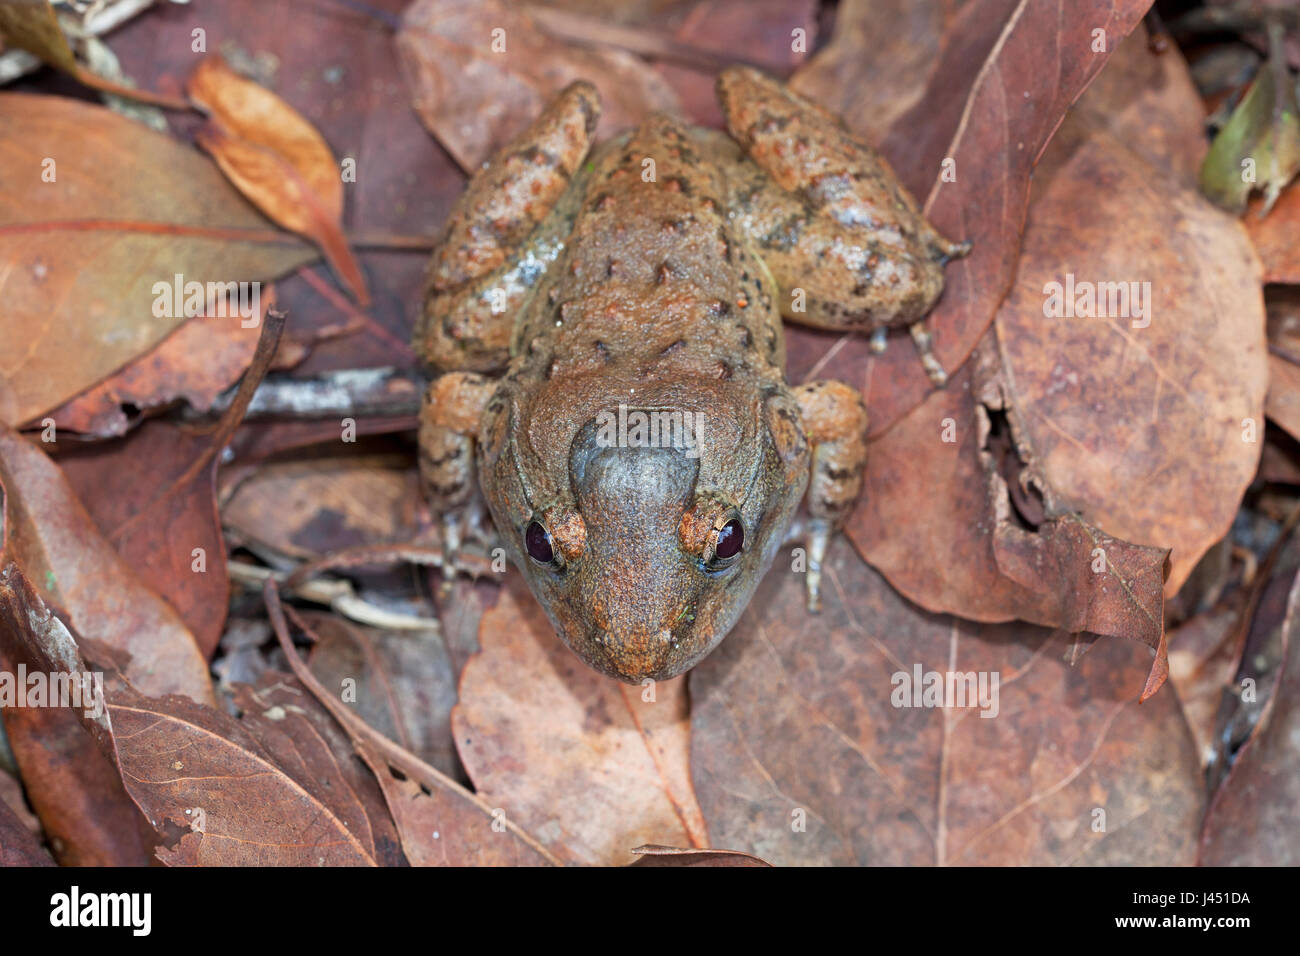 Gyldenstolpe's frog on forest floor Stock Photo